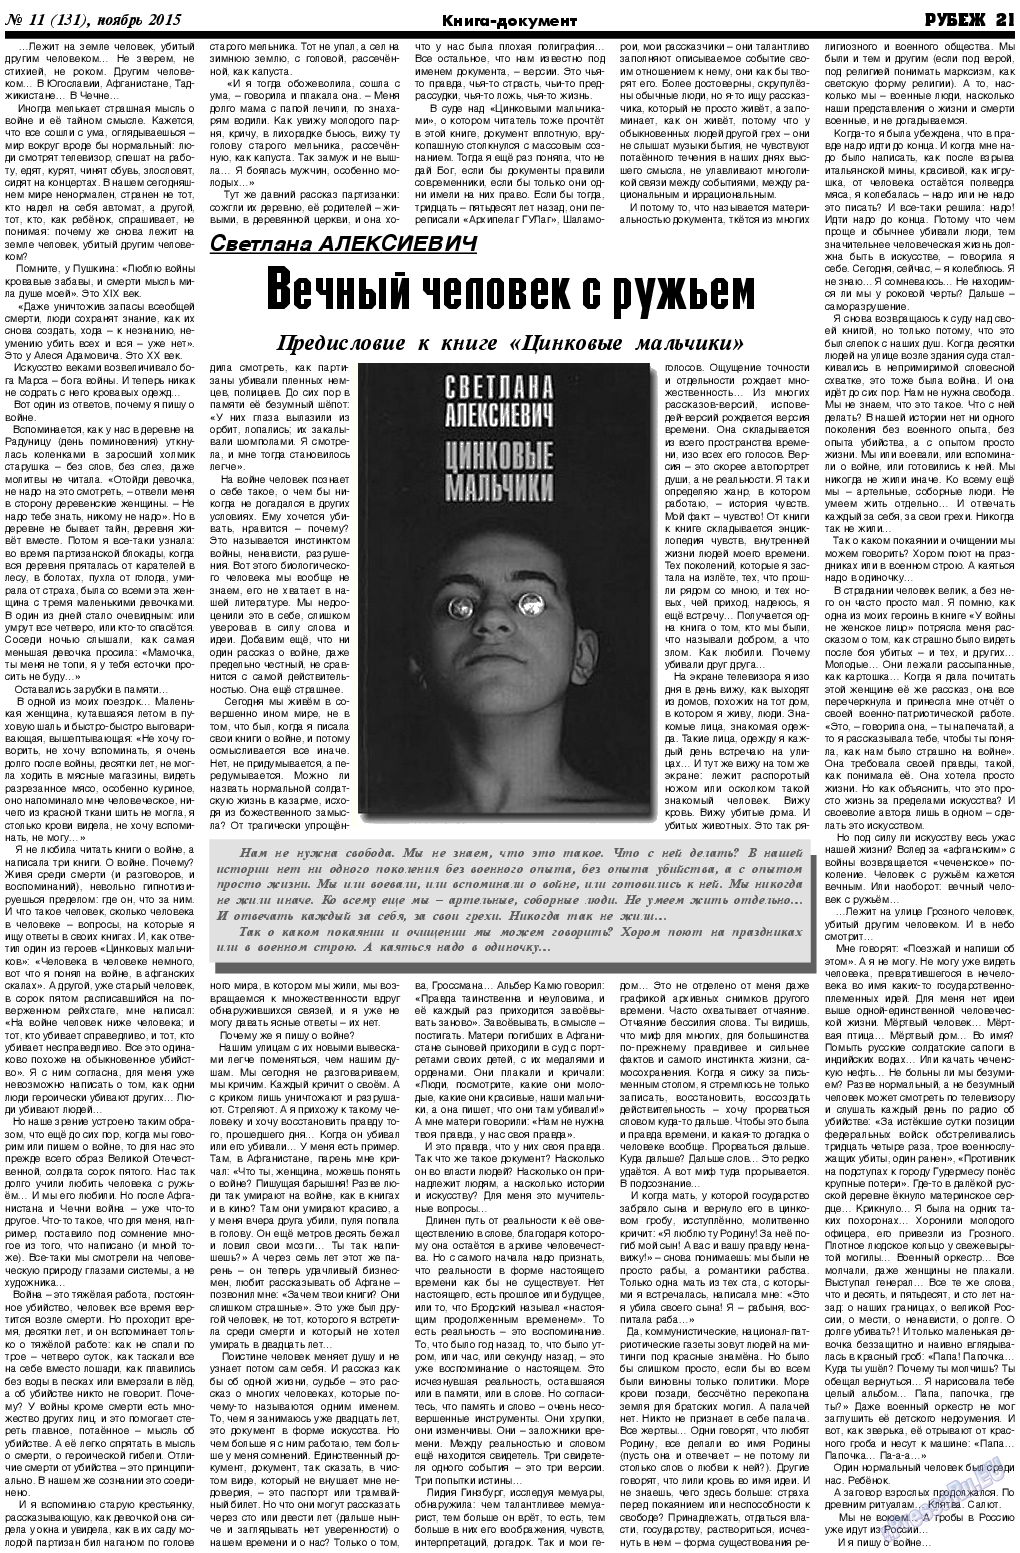 Рубеж, газета. 2015 №11 стр.21